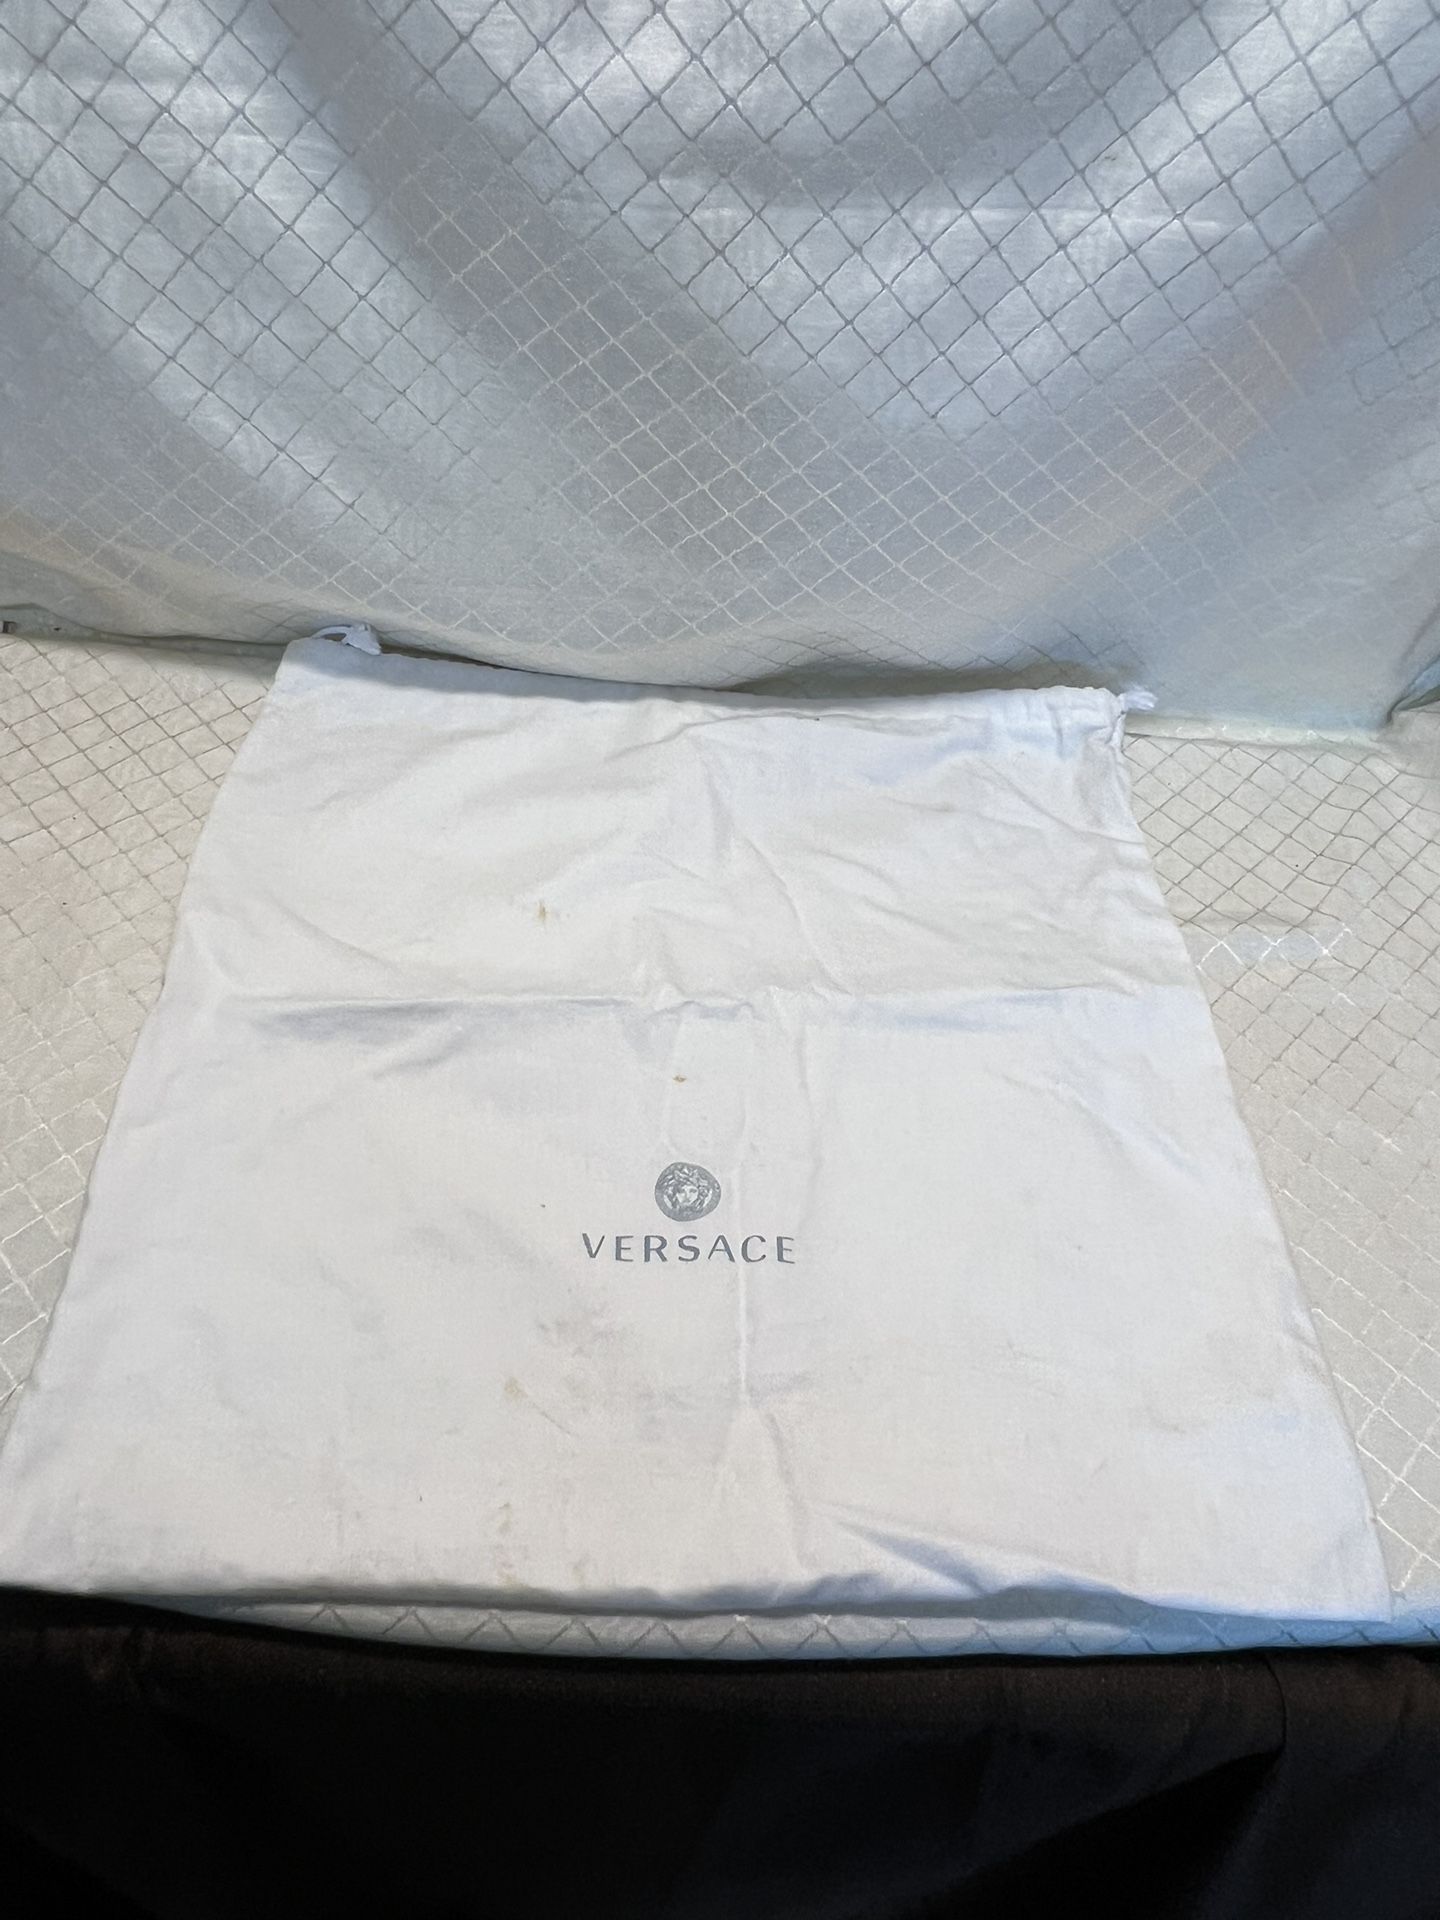 Versace Dust Bag Storage Cover Drawstring White 